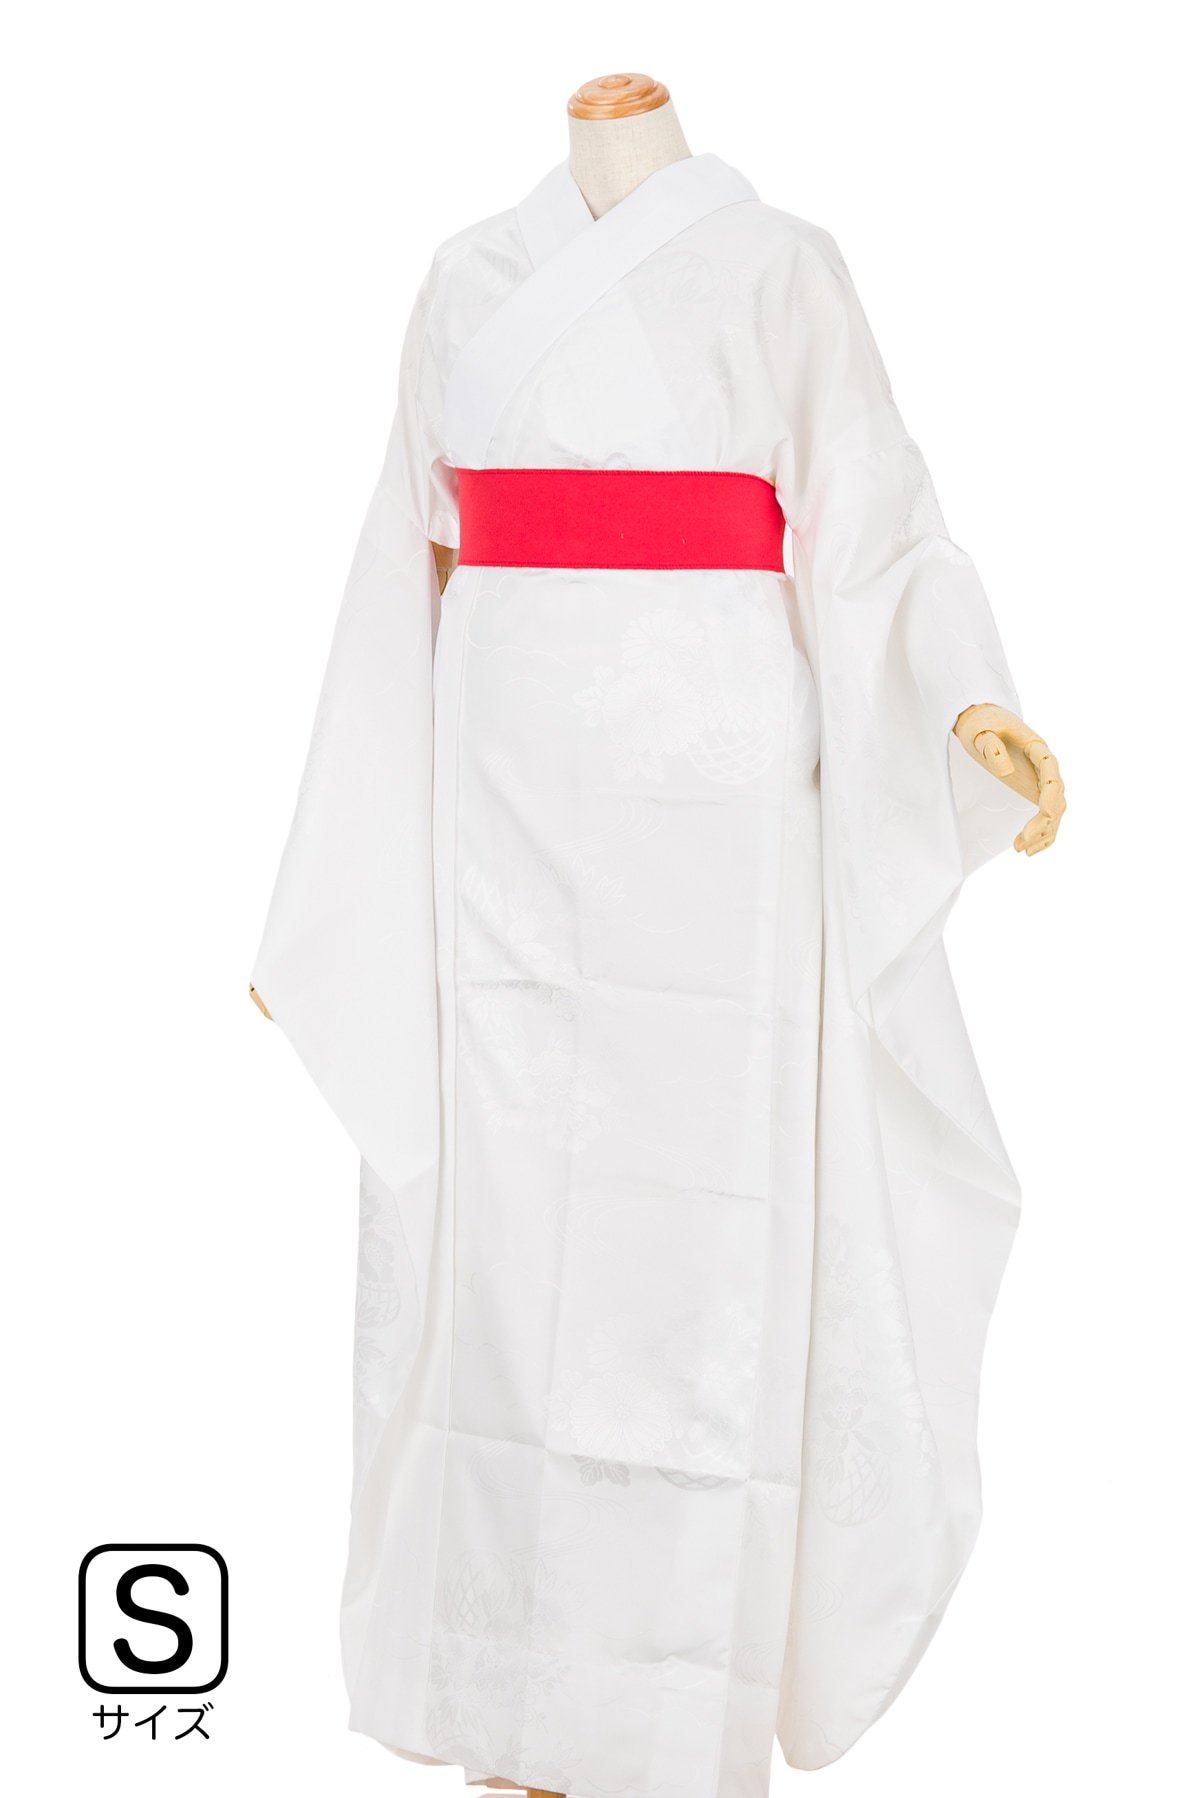 S】新品 日本製 振袖用長襦袢 白 - からん::アンティーク着物